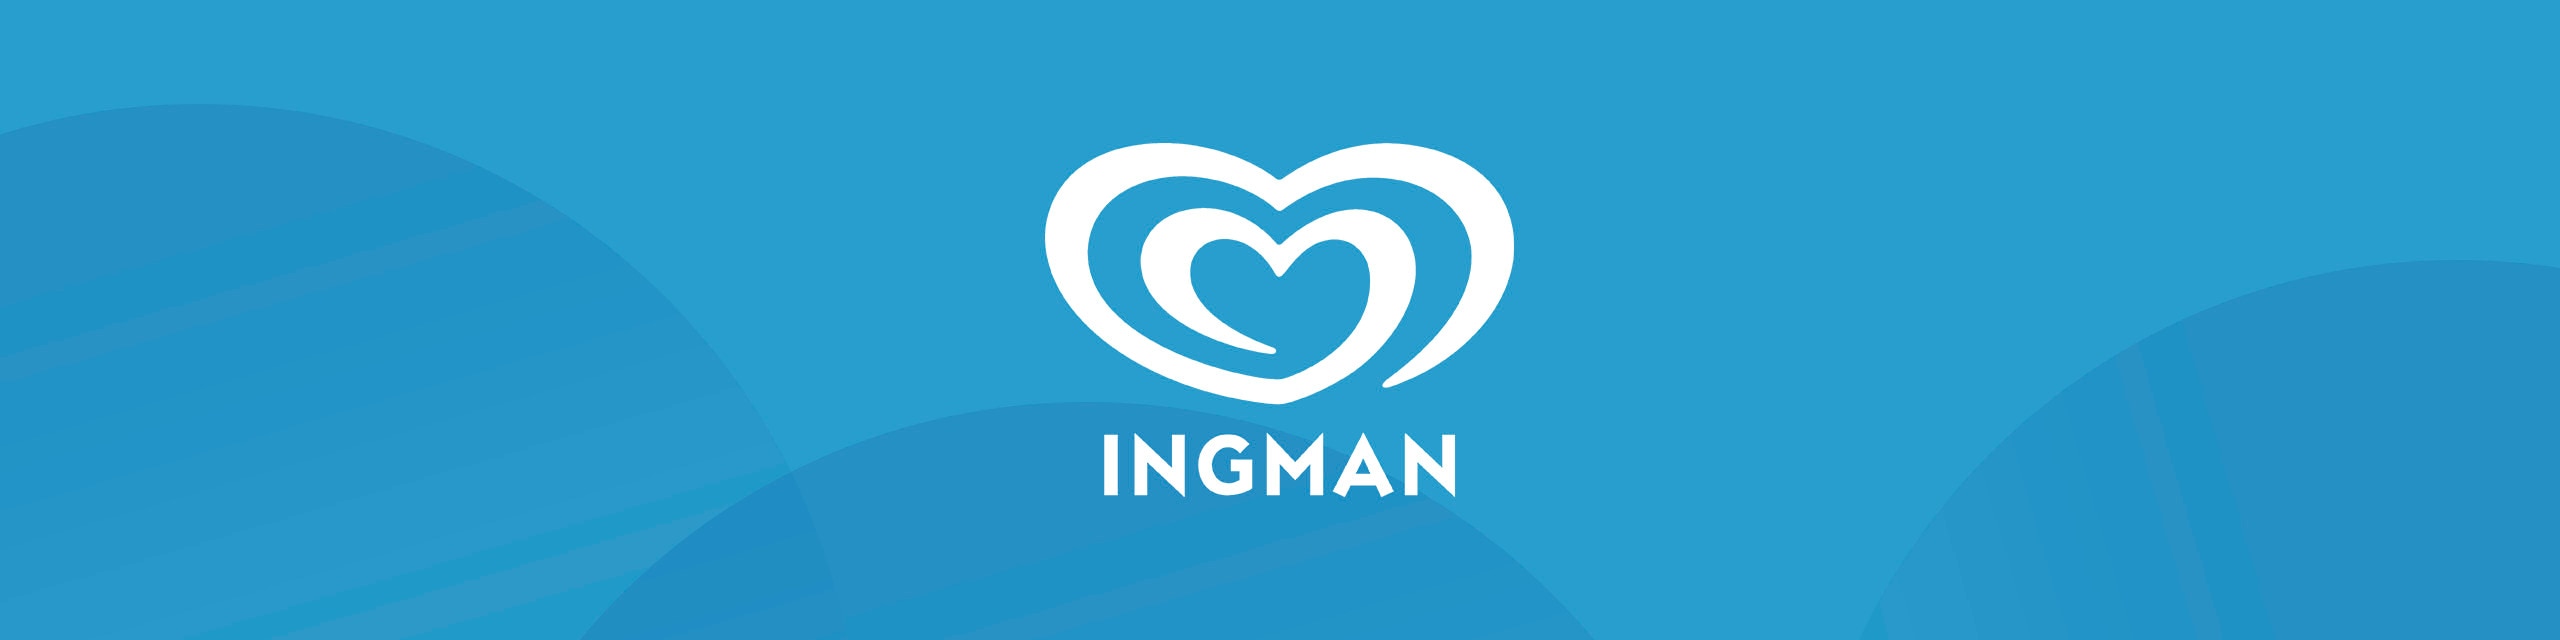 Ingman logo on blue background